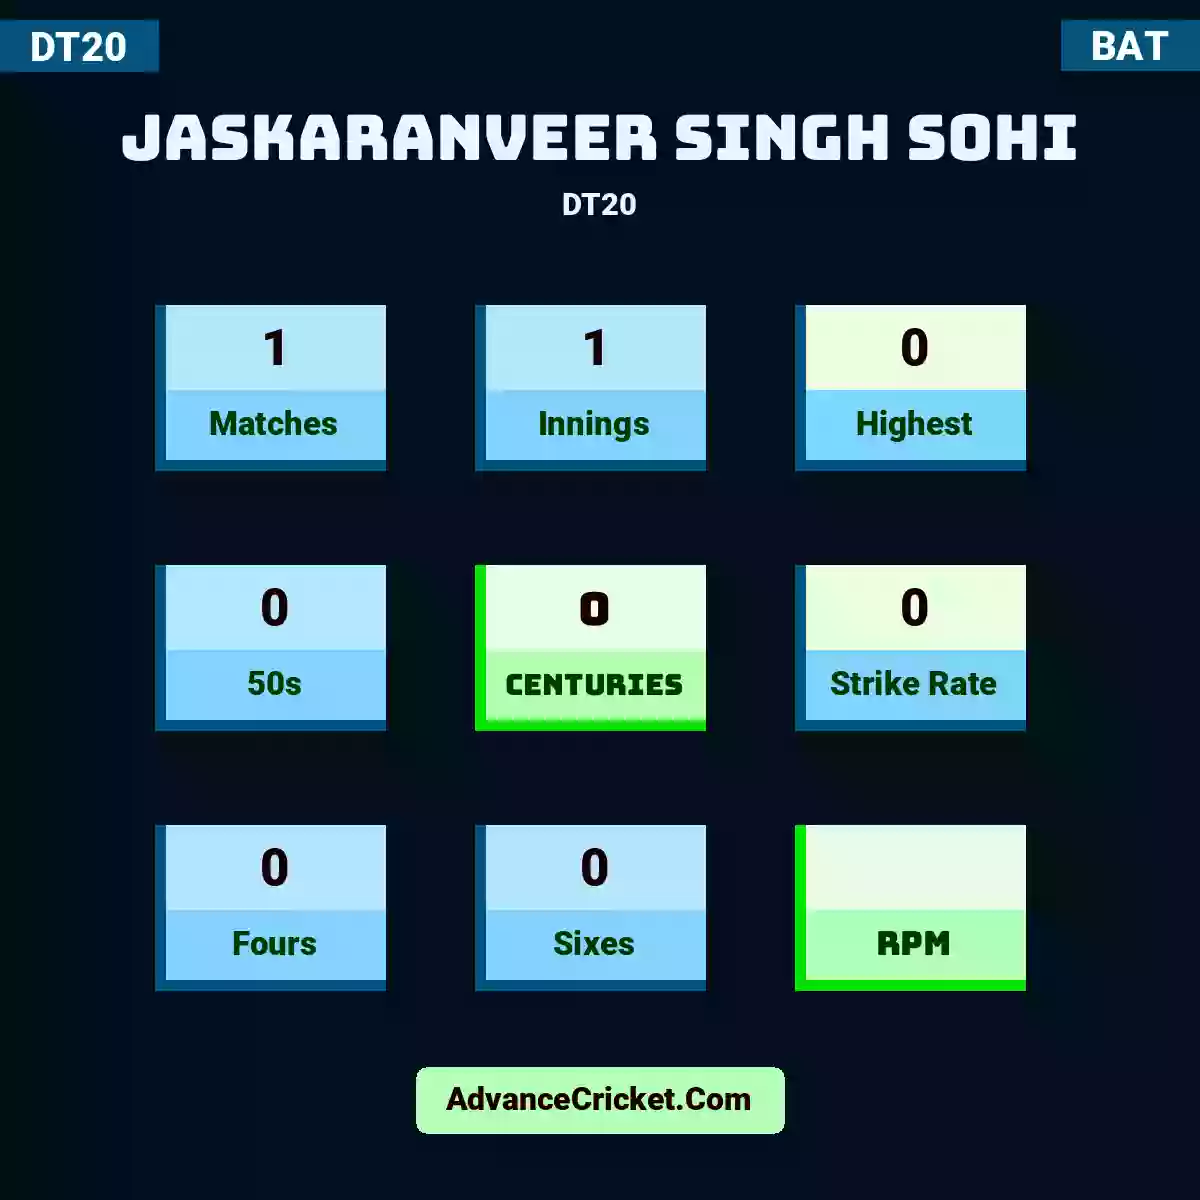 Jaskaranveer Singh Sohi DT20 , Jaskaranveer Singh Sohi played 1 matches, scored 0 runs as highest, 0 half-centuries, and 0 centuries, with a strike rate of 0. J.Sohi hit 0 fours and 0 sixes.